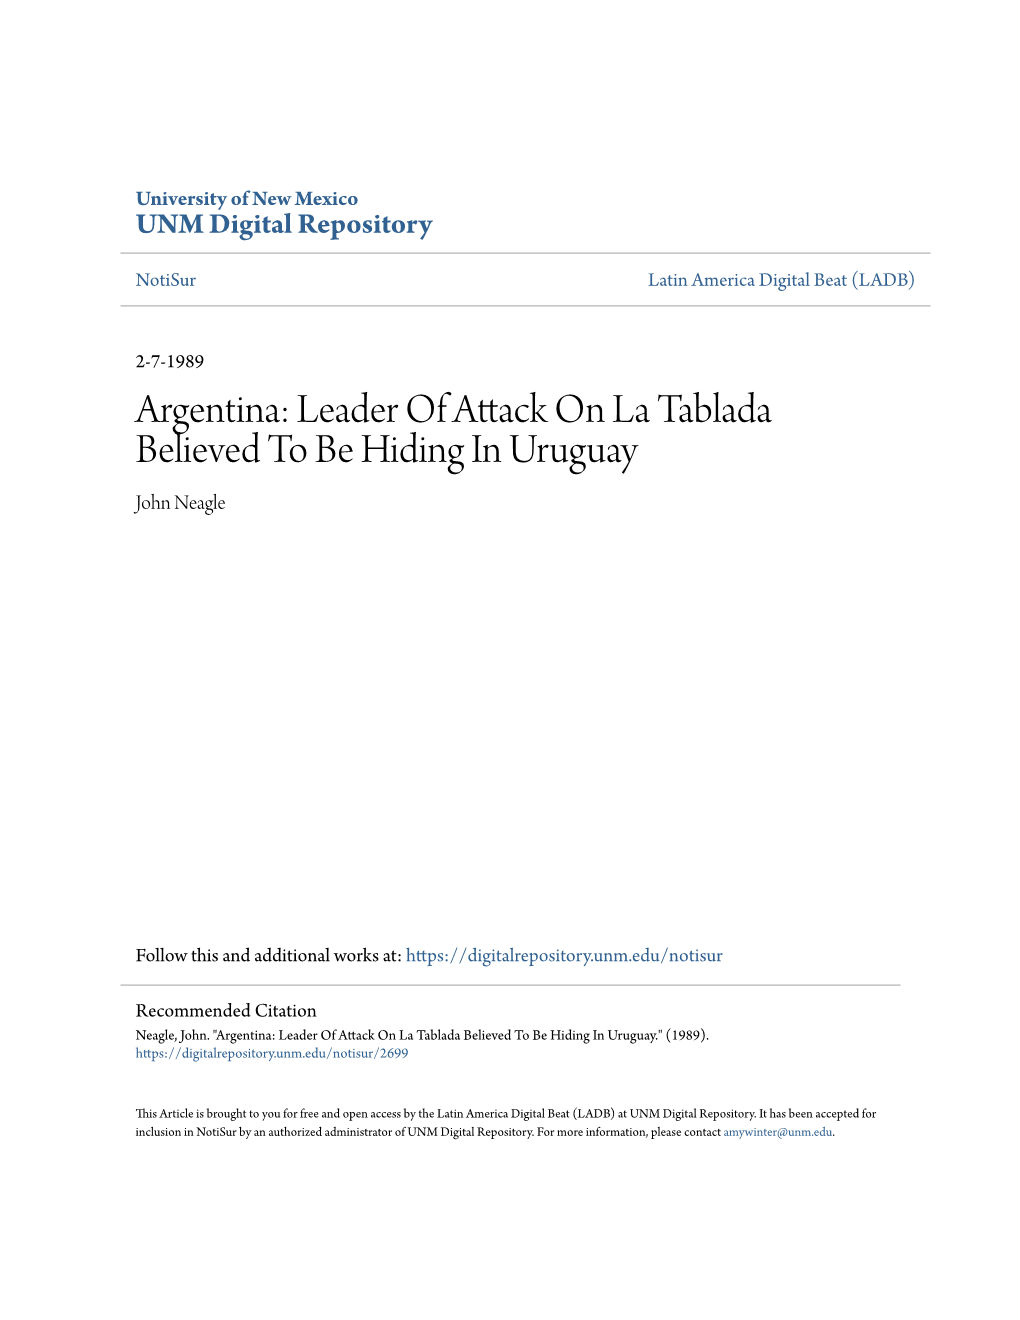 Argentina: Leader of Attack on La Tablada Believed to Be Hiding in Uruguay John Neagle